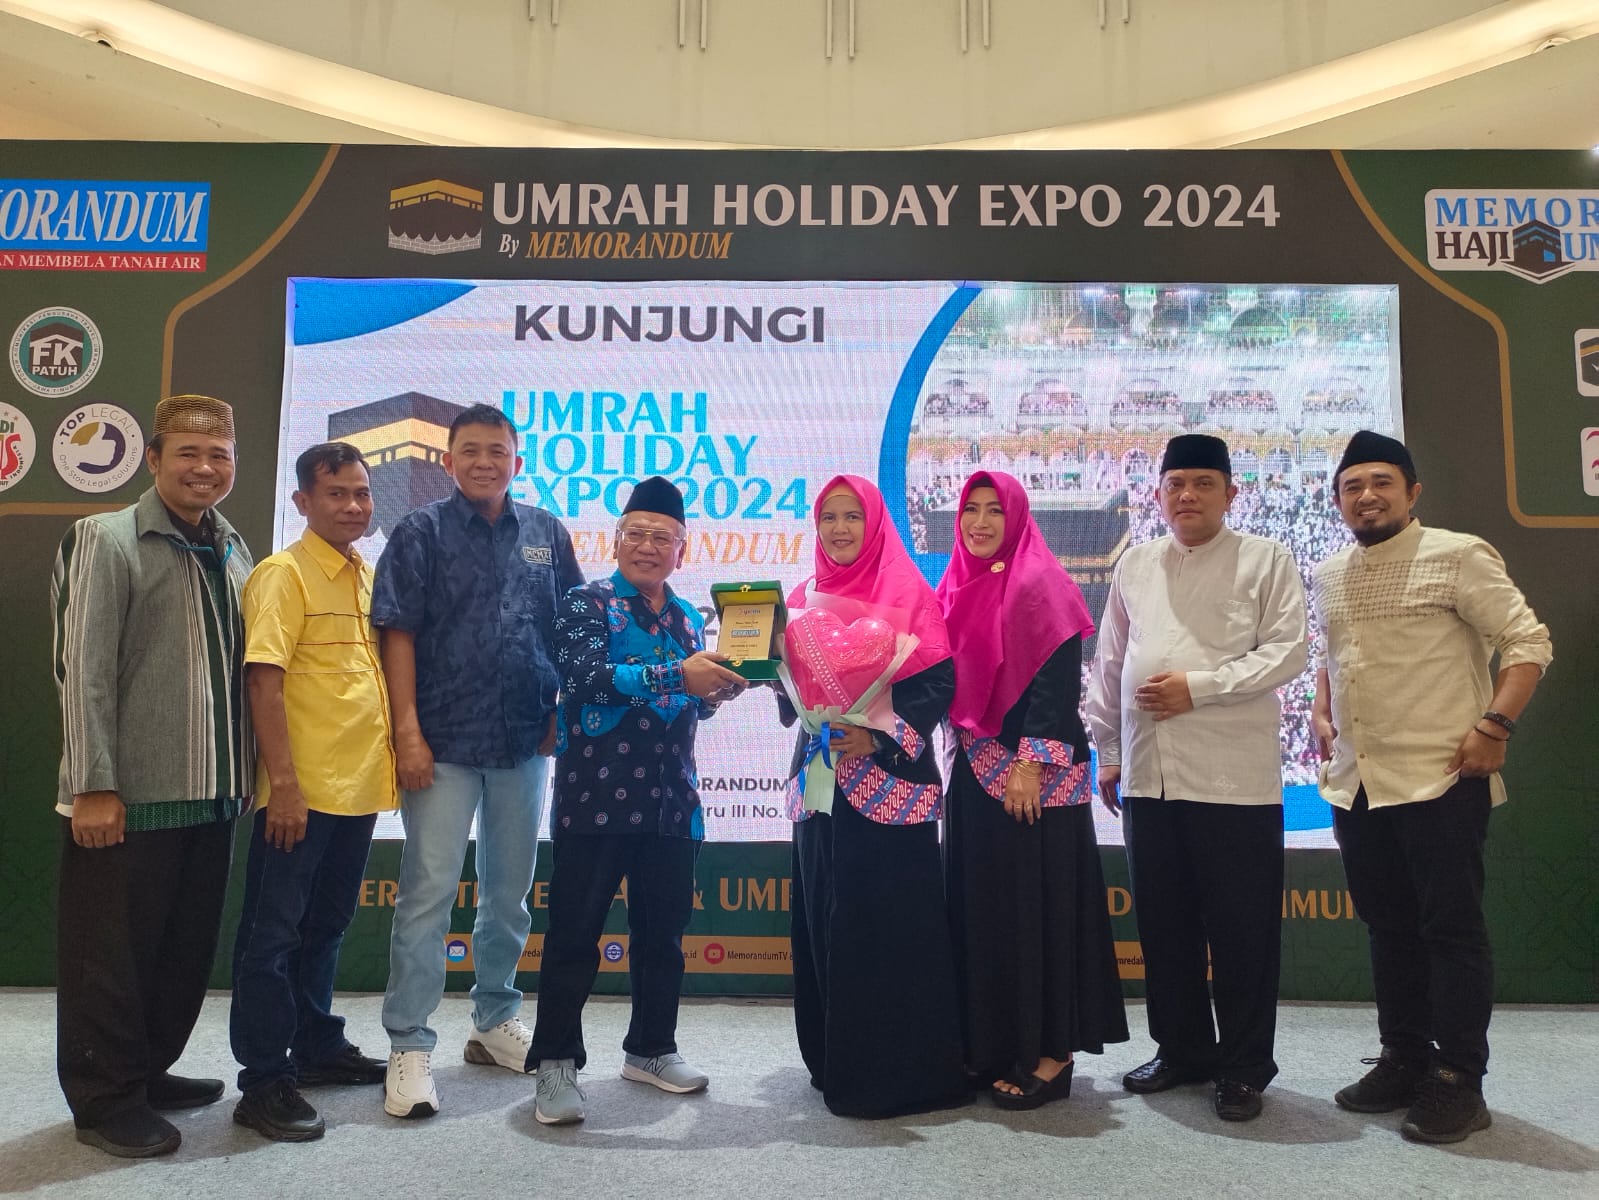 Resmi Ditutup, 11 Ribu Pengunjung Datangi Pameran Umrah Holiday Expo, Transaksi Capai Rp 600 Juta